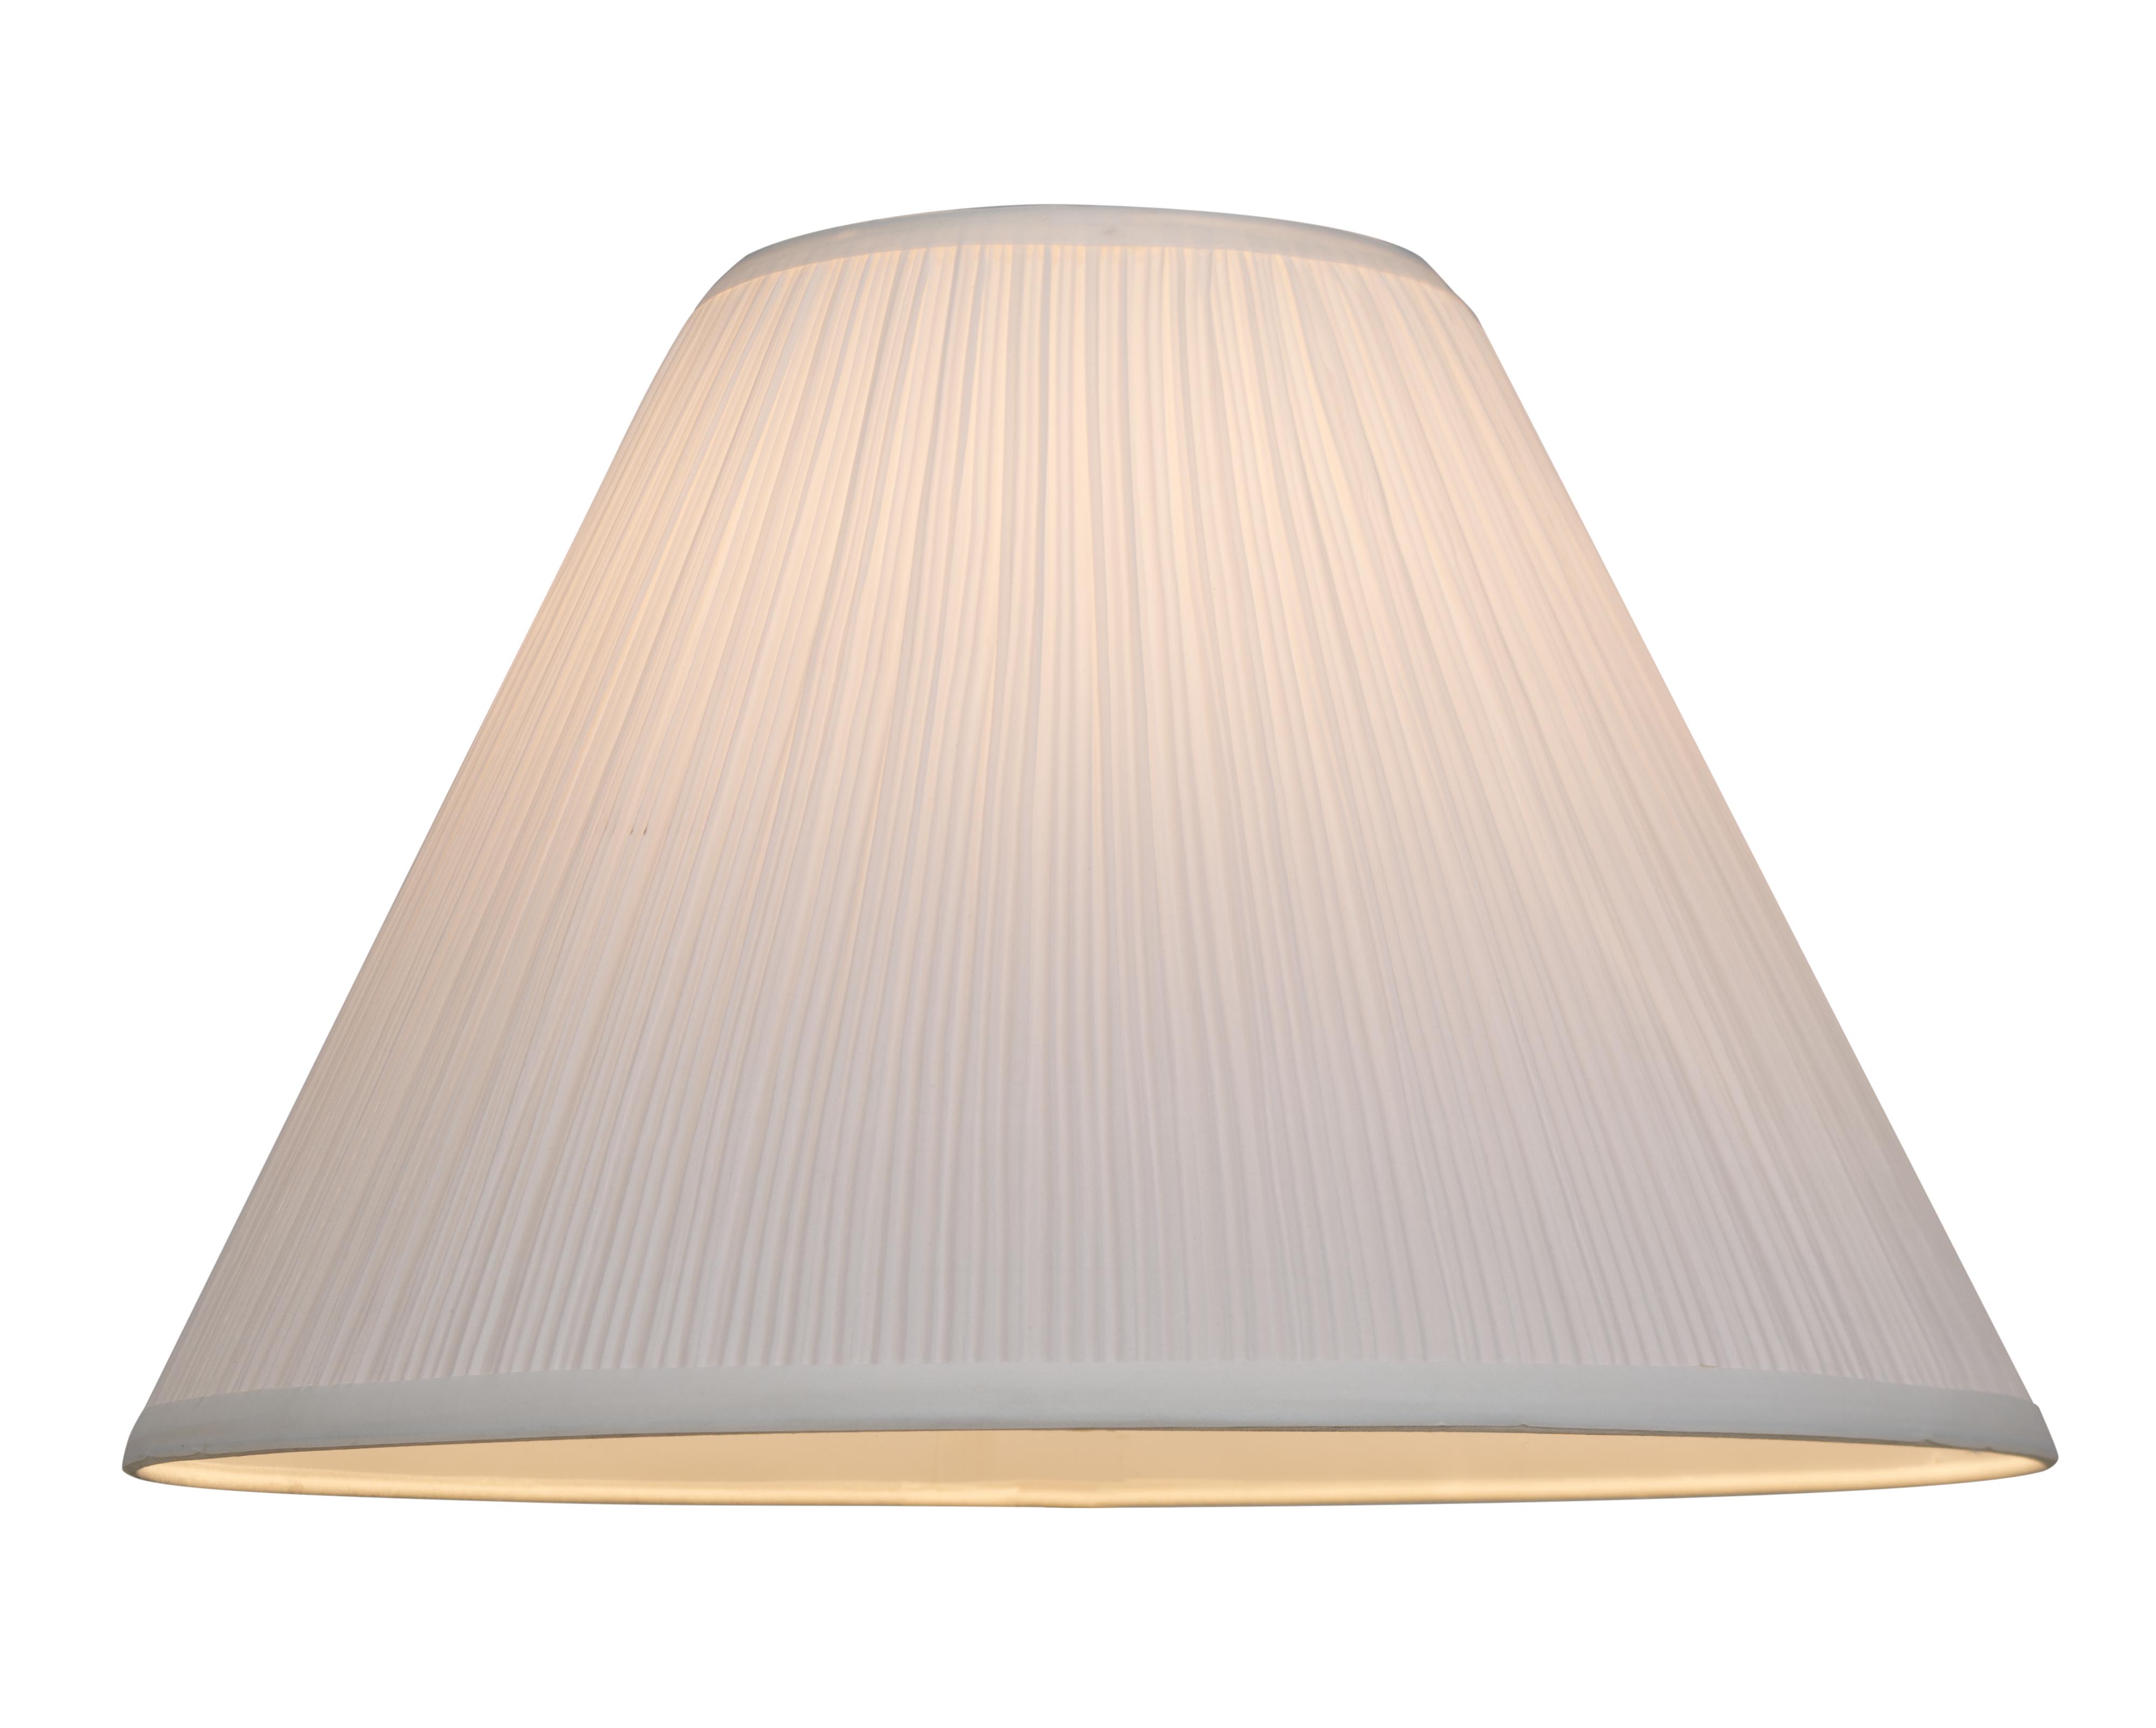 Mainstays 18" Soft Pleat Empire Lamp Shade, White - image 7 of 8